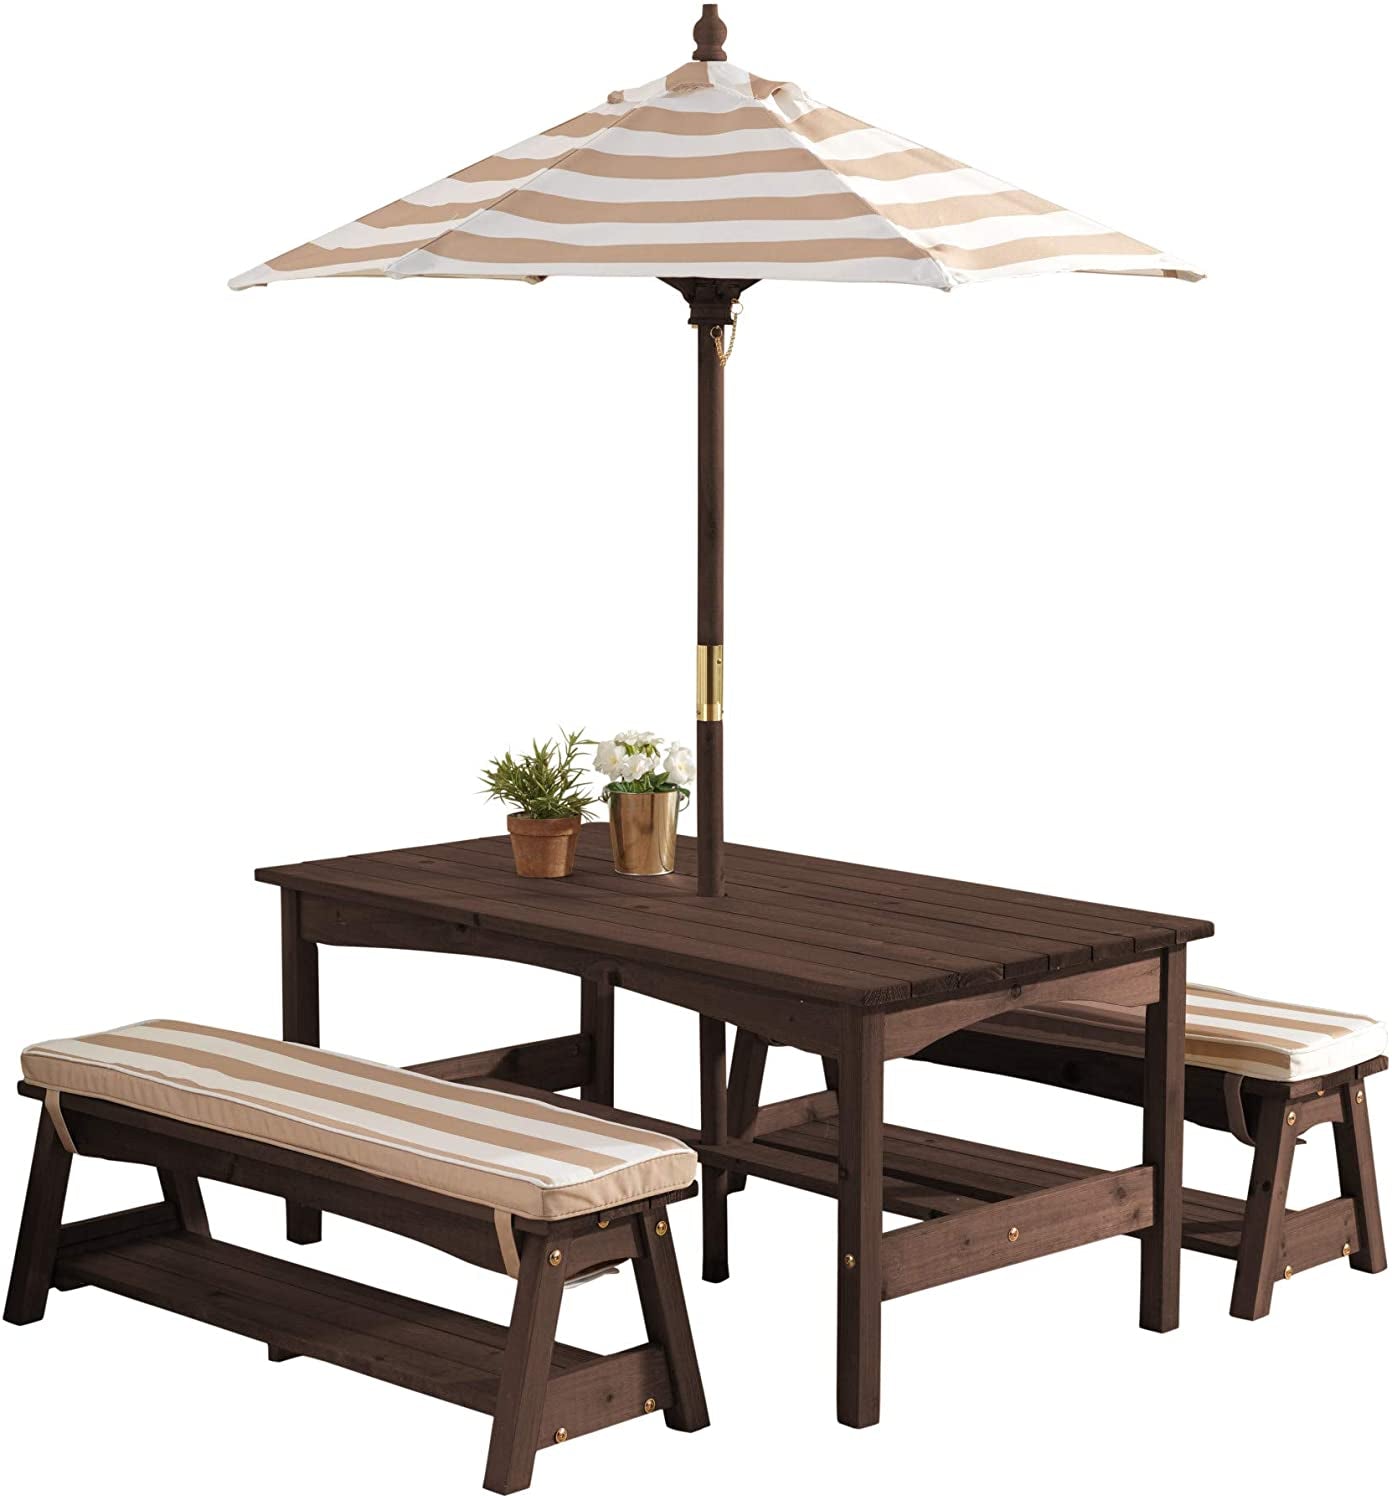 KidKraft, Kidkraft Outdoor Table & Bench Set with Cushions & Umbrella - Navy & White Stripes, Natural, 1 Cm